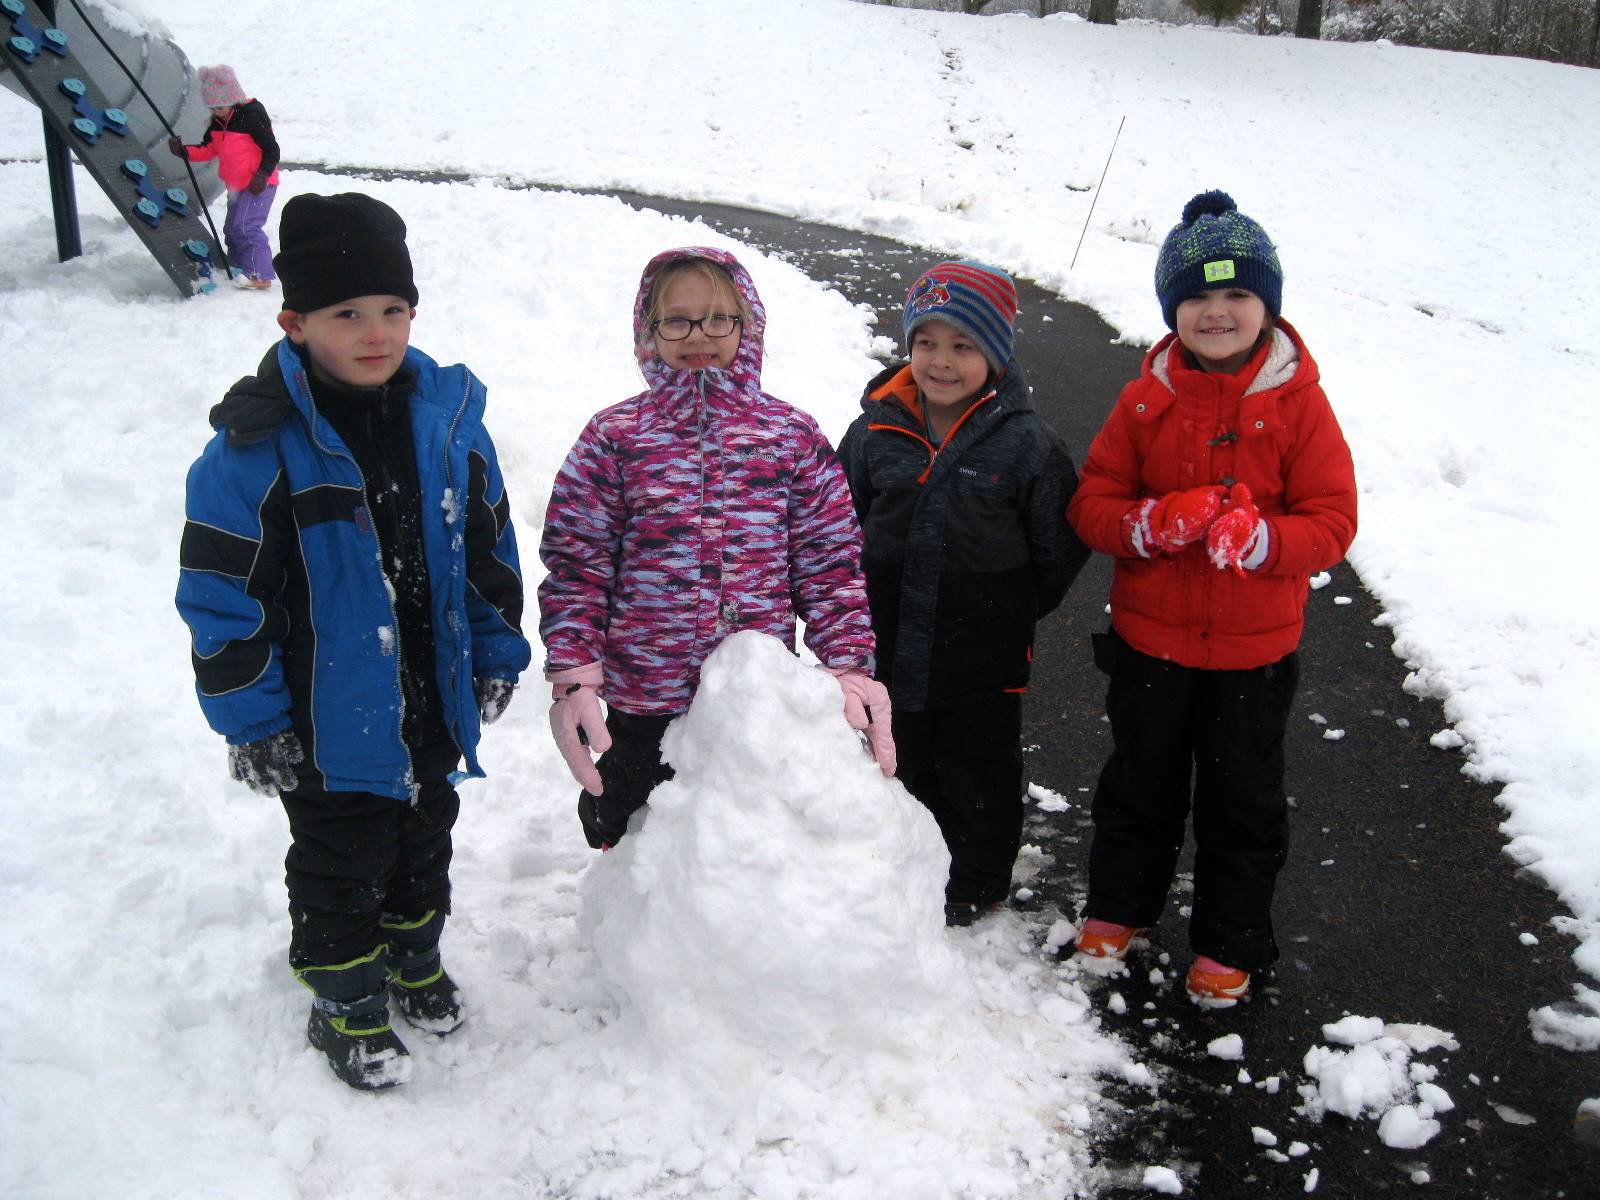 A group of children building a snowman.